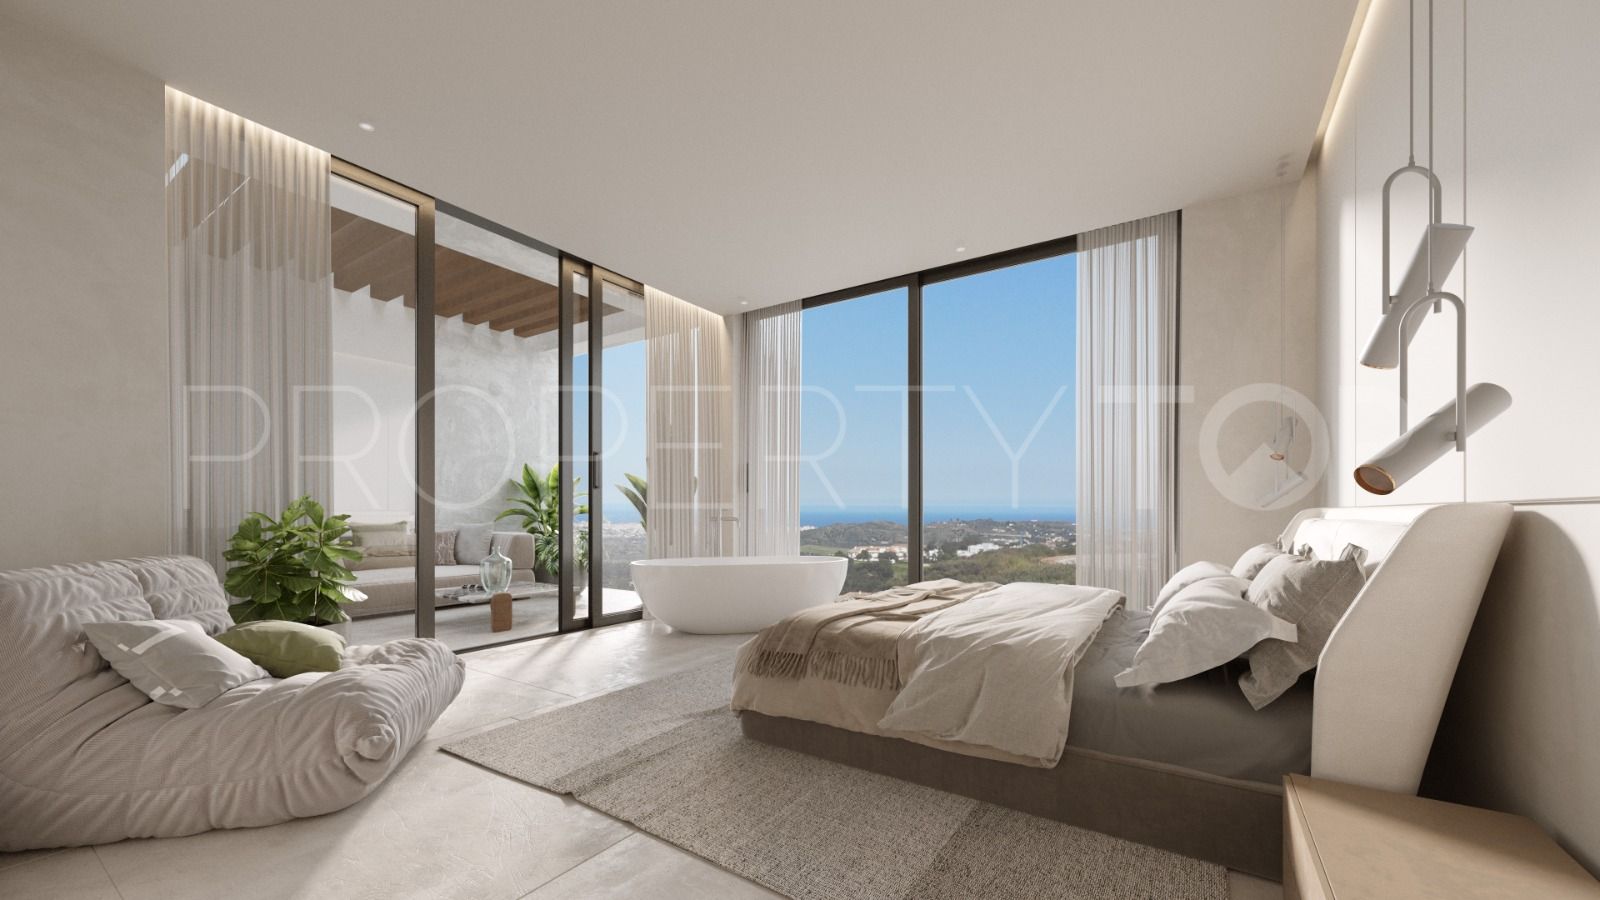 For sale villa in La Cala Golf Resort with 5 bedrooms